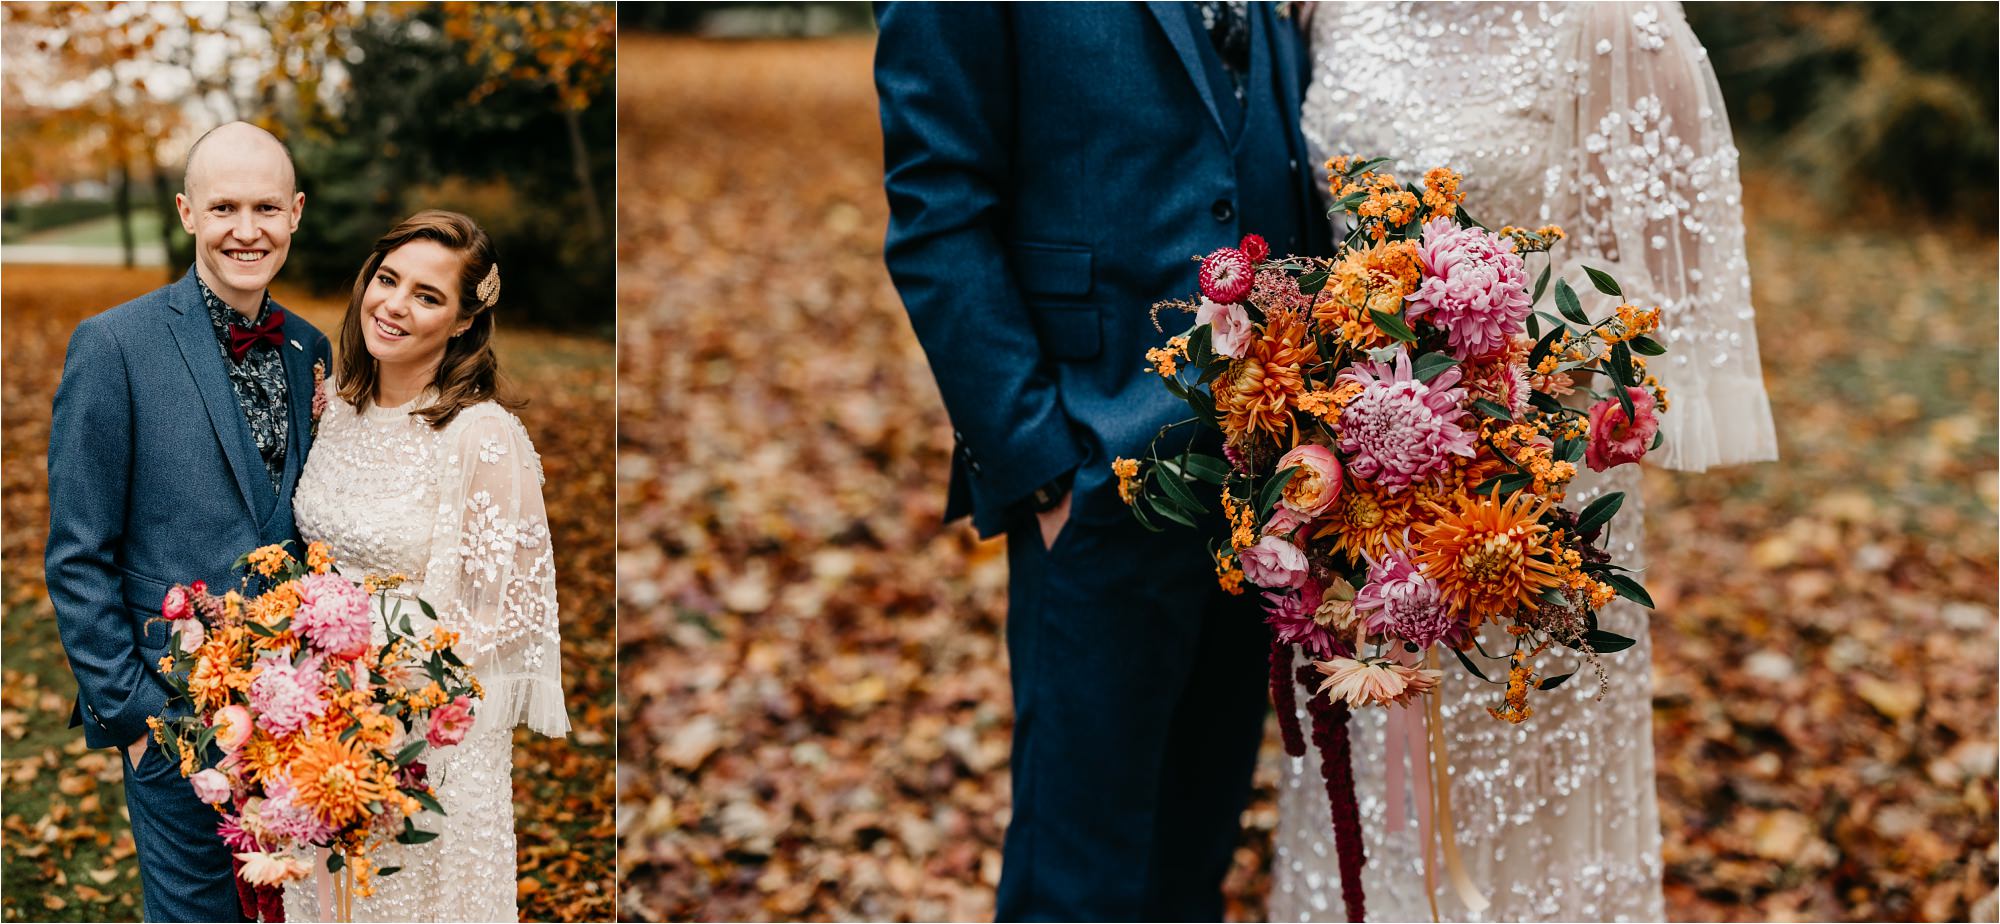 Duthie Park aberdeen micro wedding bride groom portrait in autumn winter leaves fauna folk flowers lush wild colourful bouquet